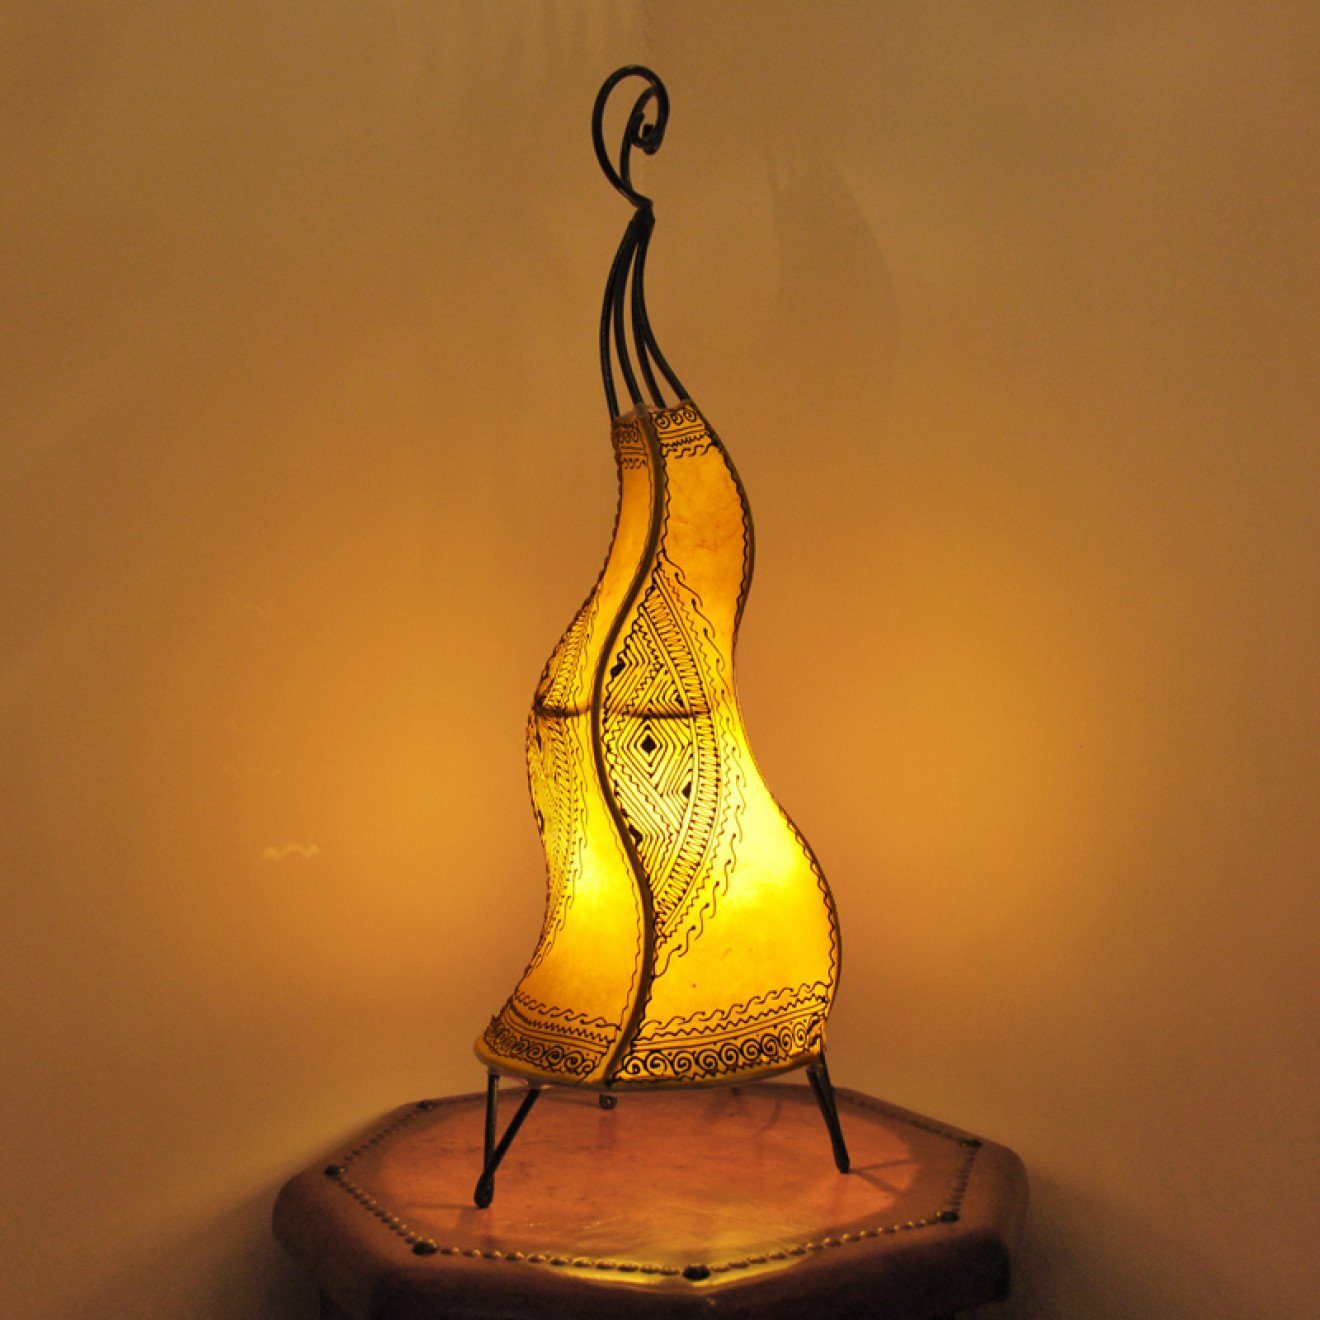 Leder Tischlampe l-artisan H60cm Marokkanische Stehlampe, CHEVAL Gelb Bodenleuchte,